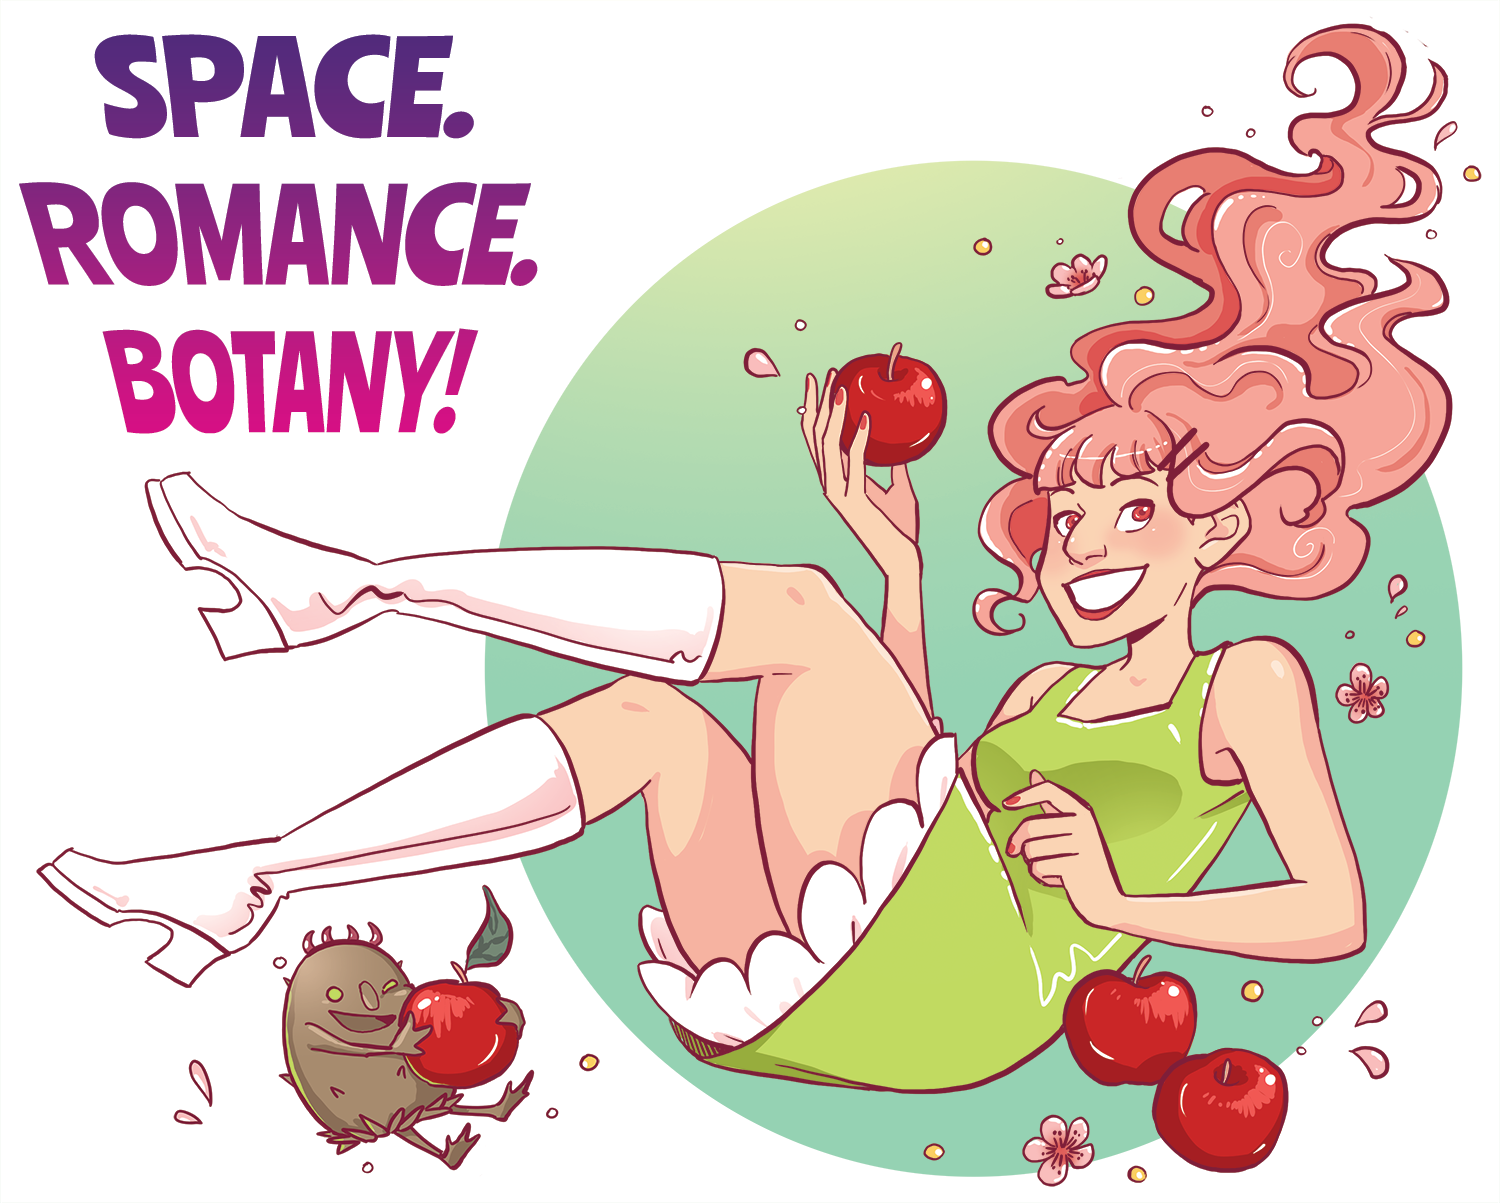 Space. Romance. Botany!